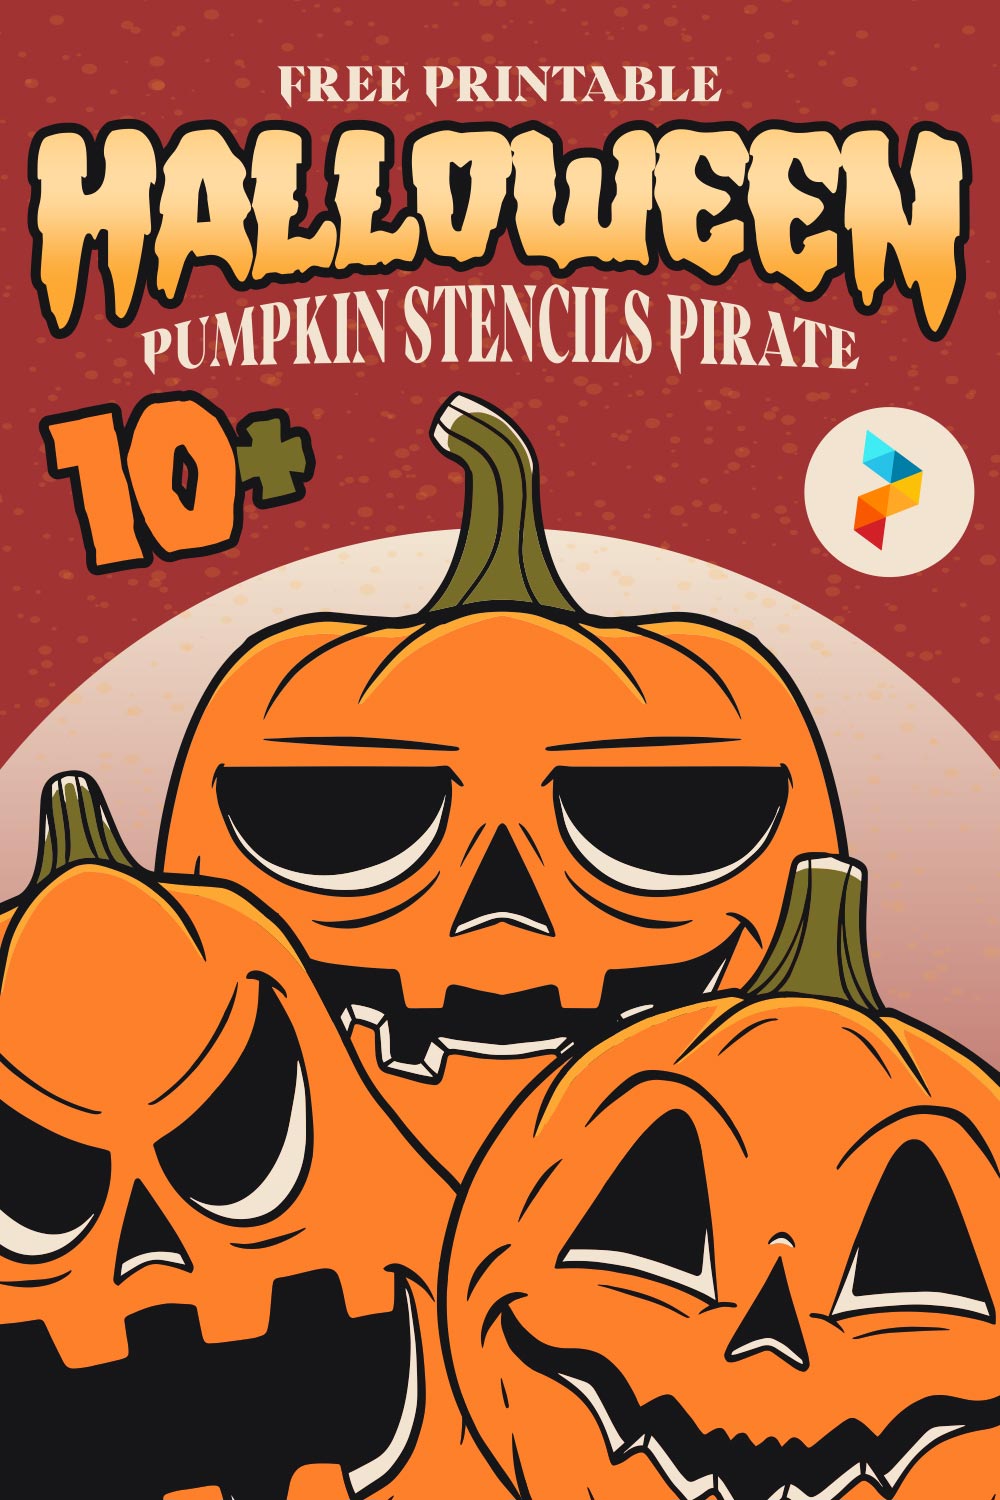 Printable Halloween Pumpkin Stencils Pirate